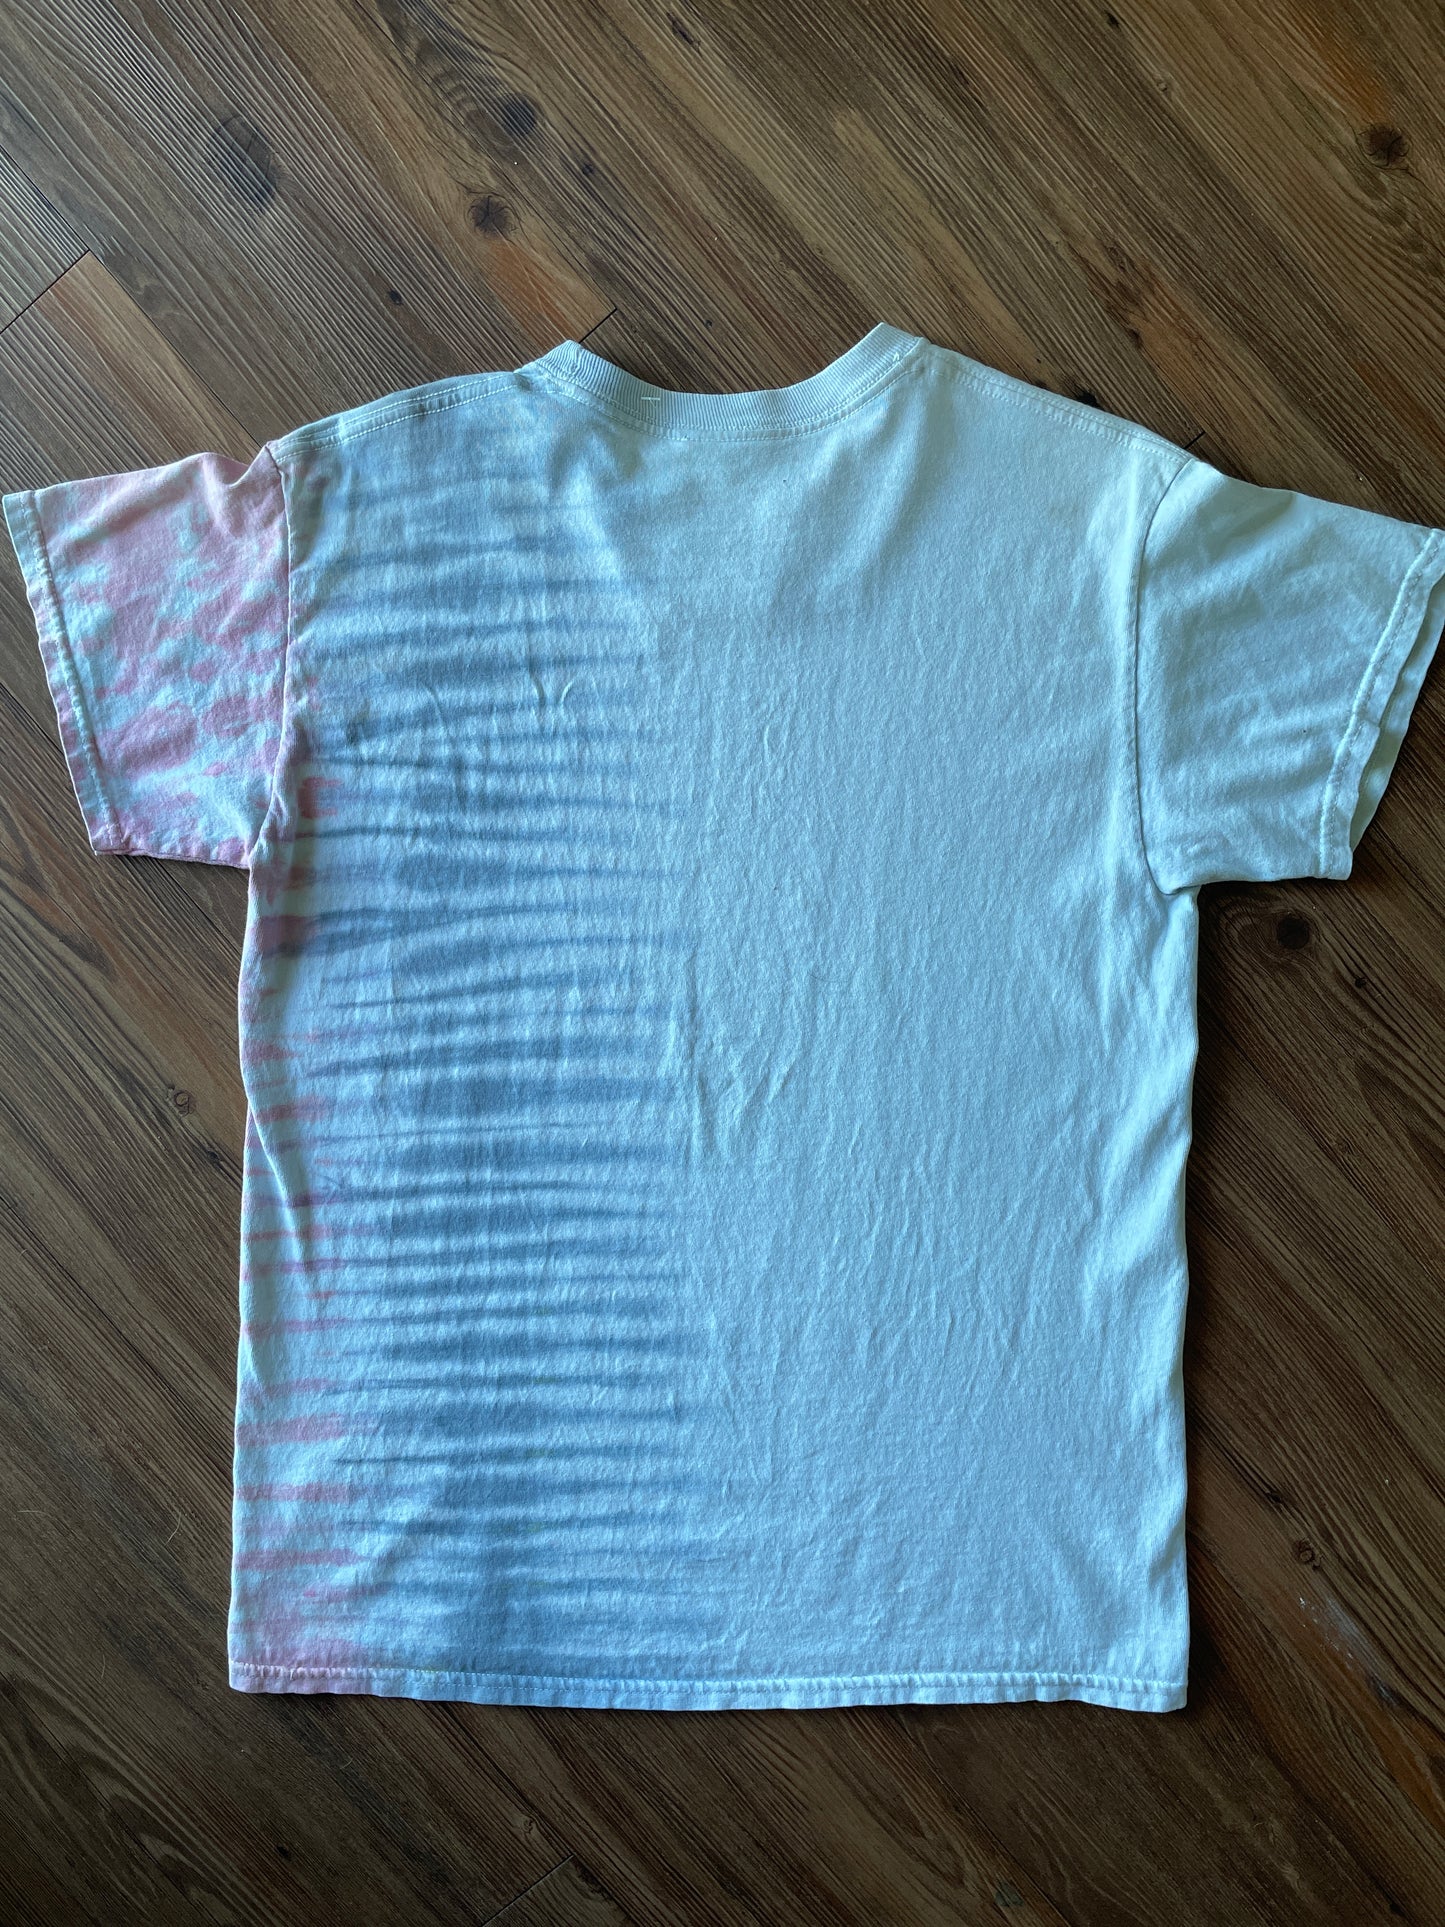 Medium Men’s Scarface Handmade Tie Dye T-Shirt | Pastel Pink and Grey Pleated Tie Dye Short Sleeve